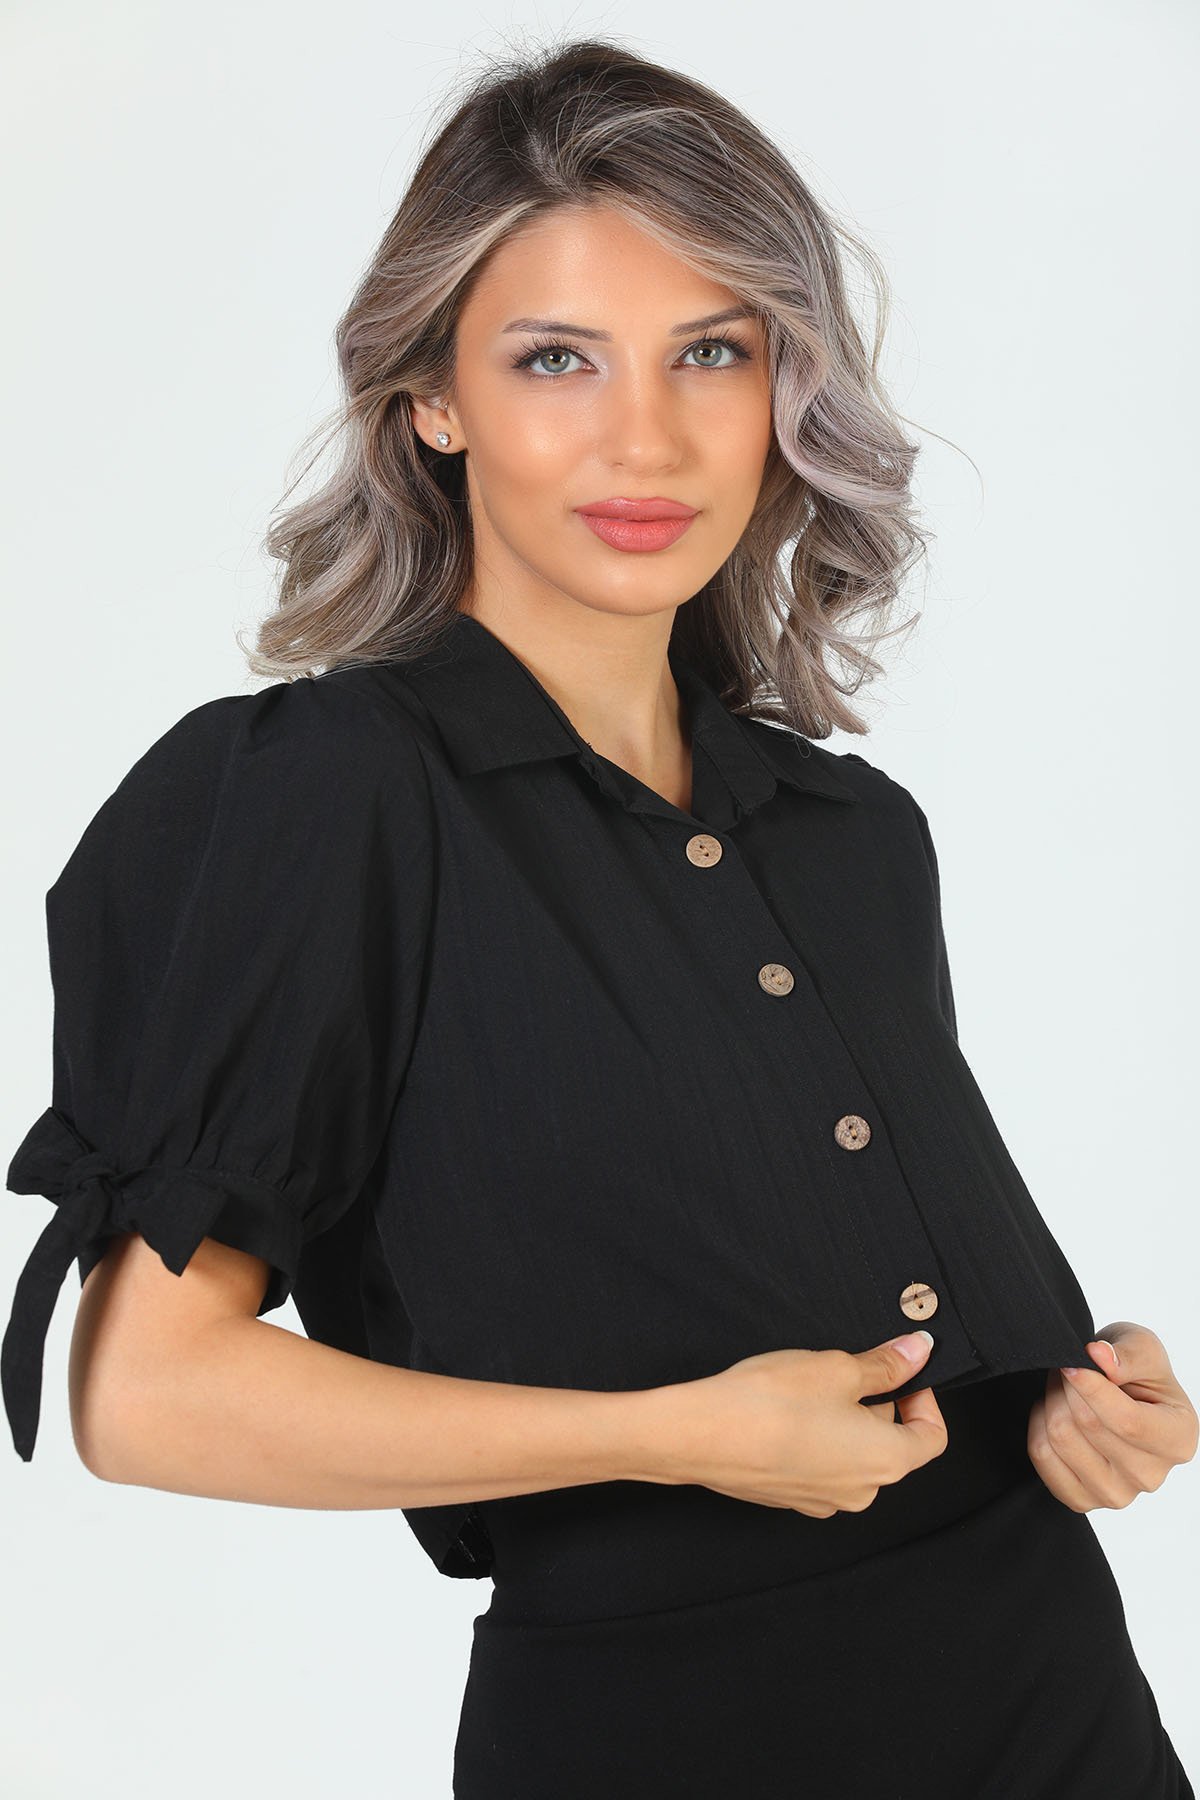 Kadın Kol Bağlama Detaylı Crop Gömlek Siyah 503828 - tozlu.com